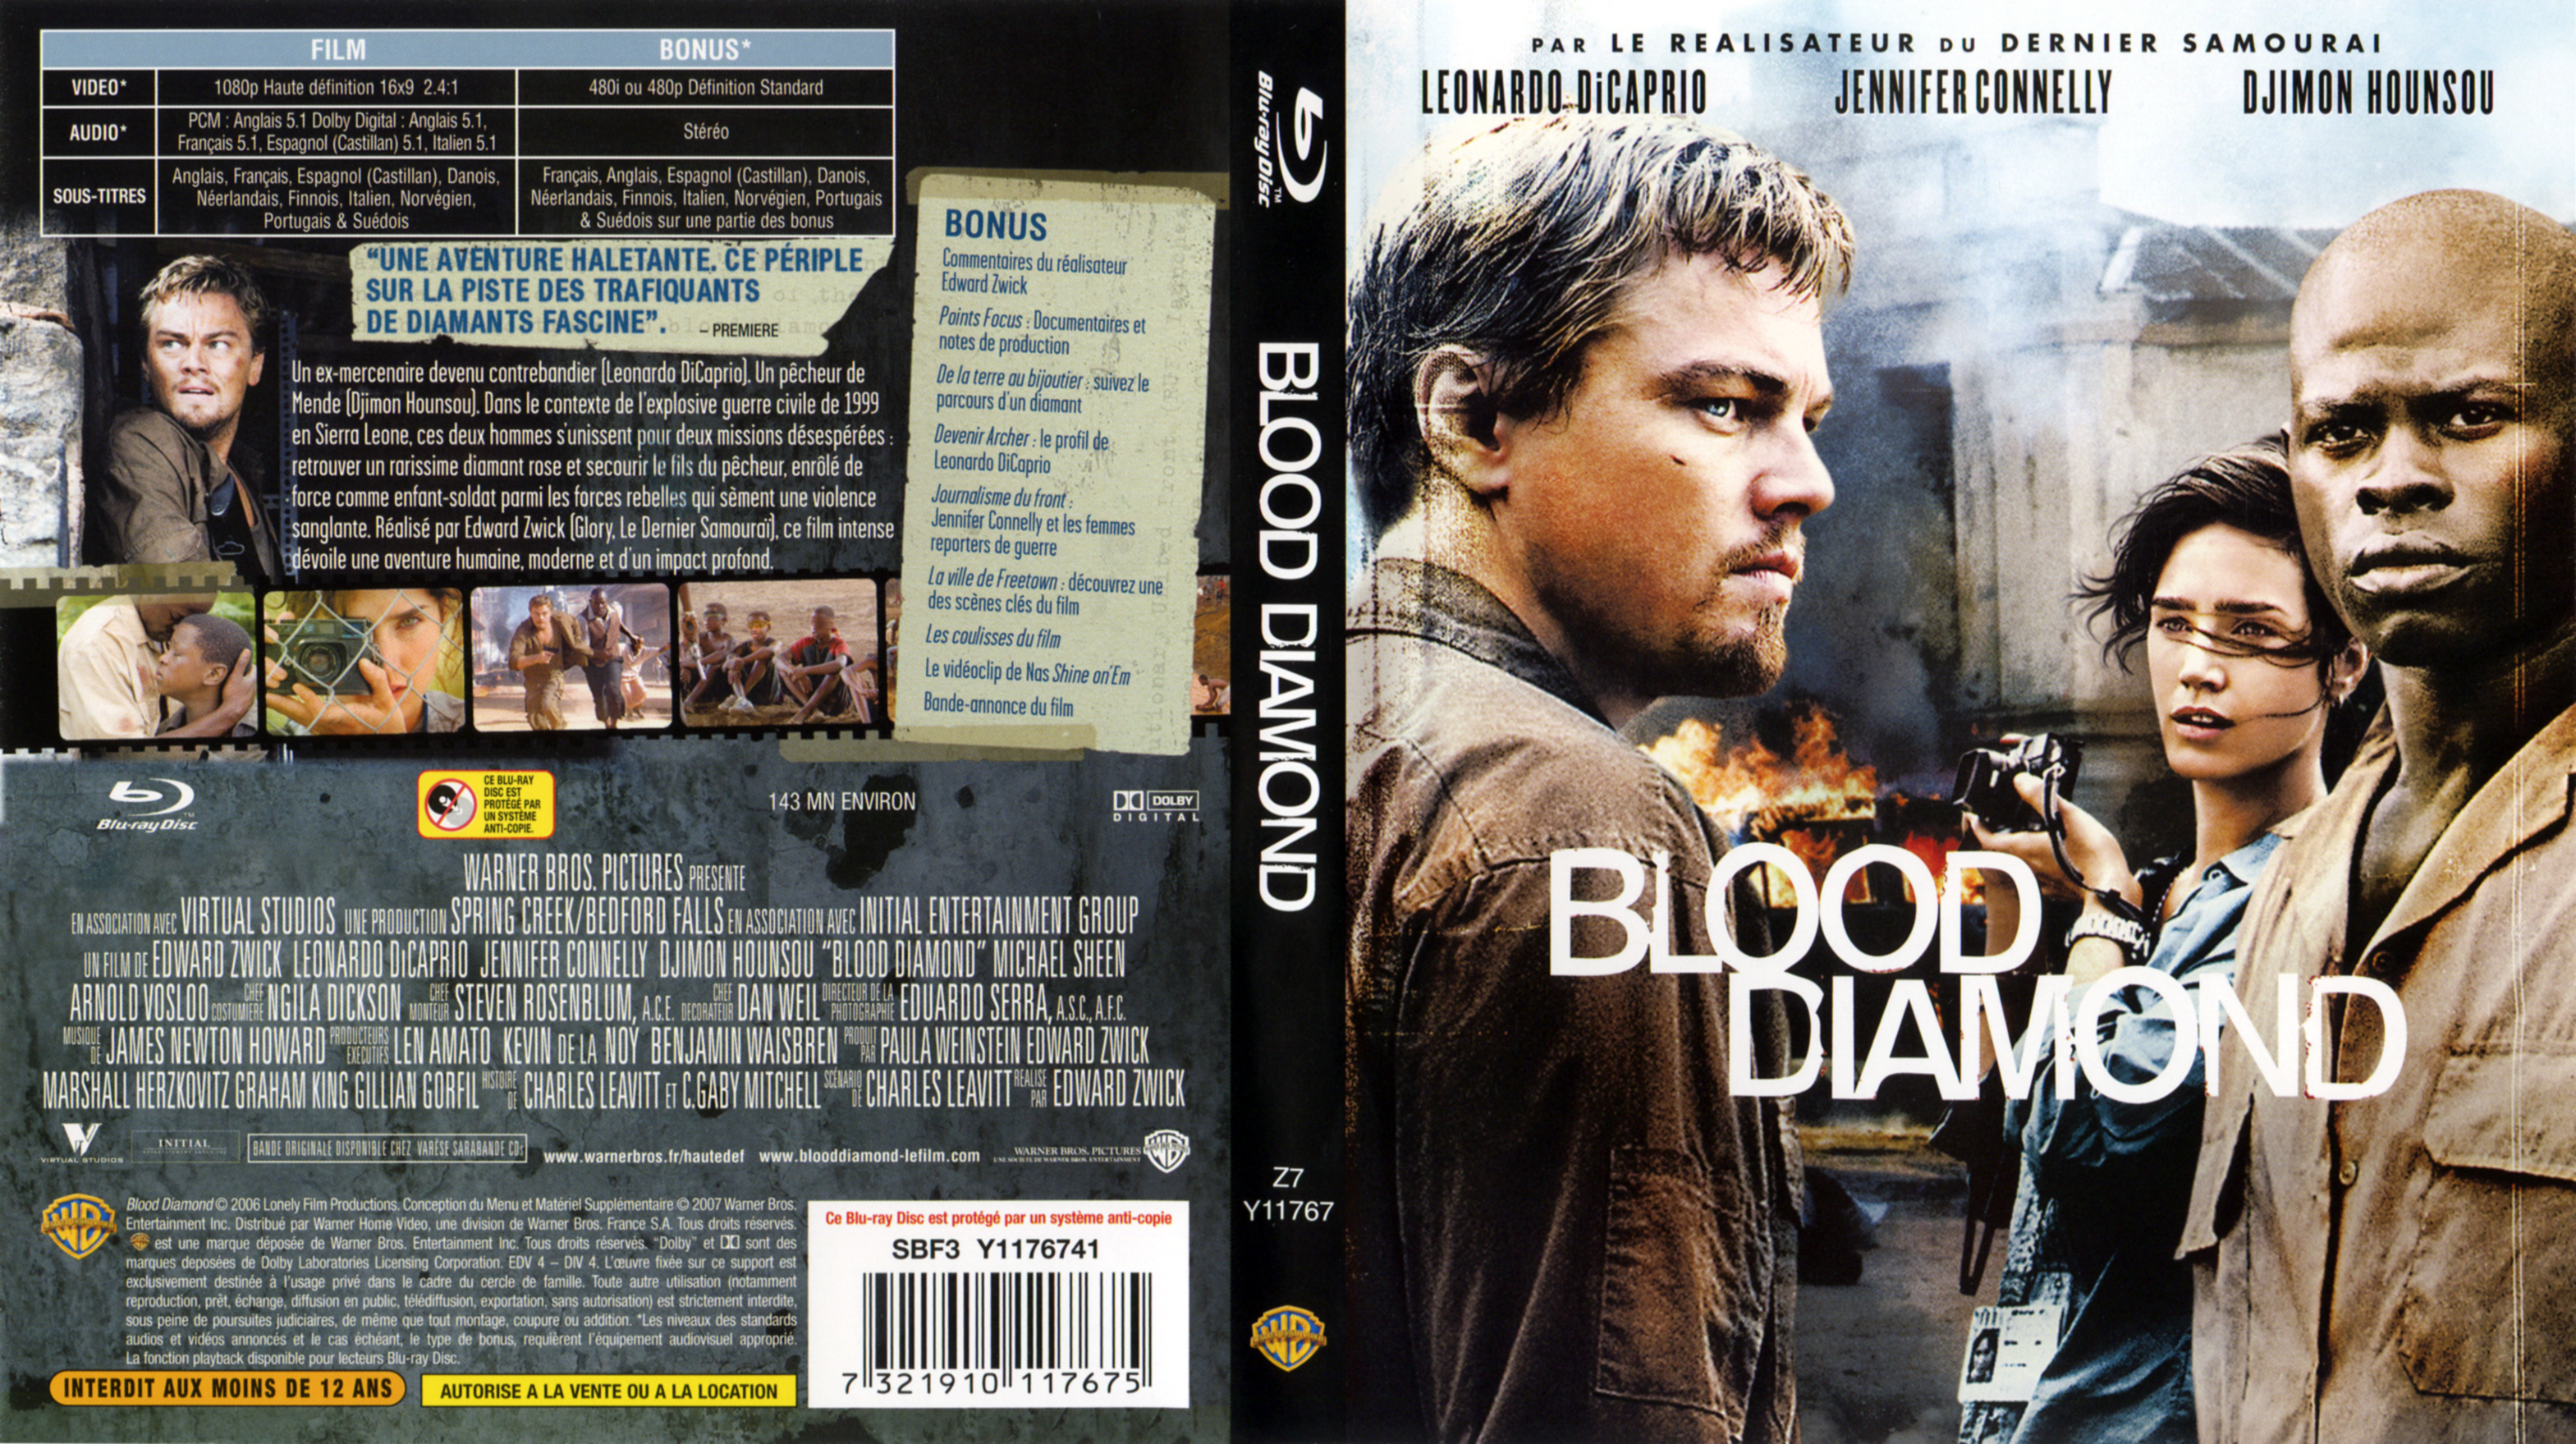 Jaquette DVD Blood diamond (BLU-RAY)